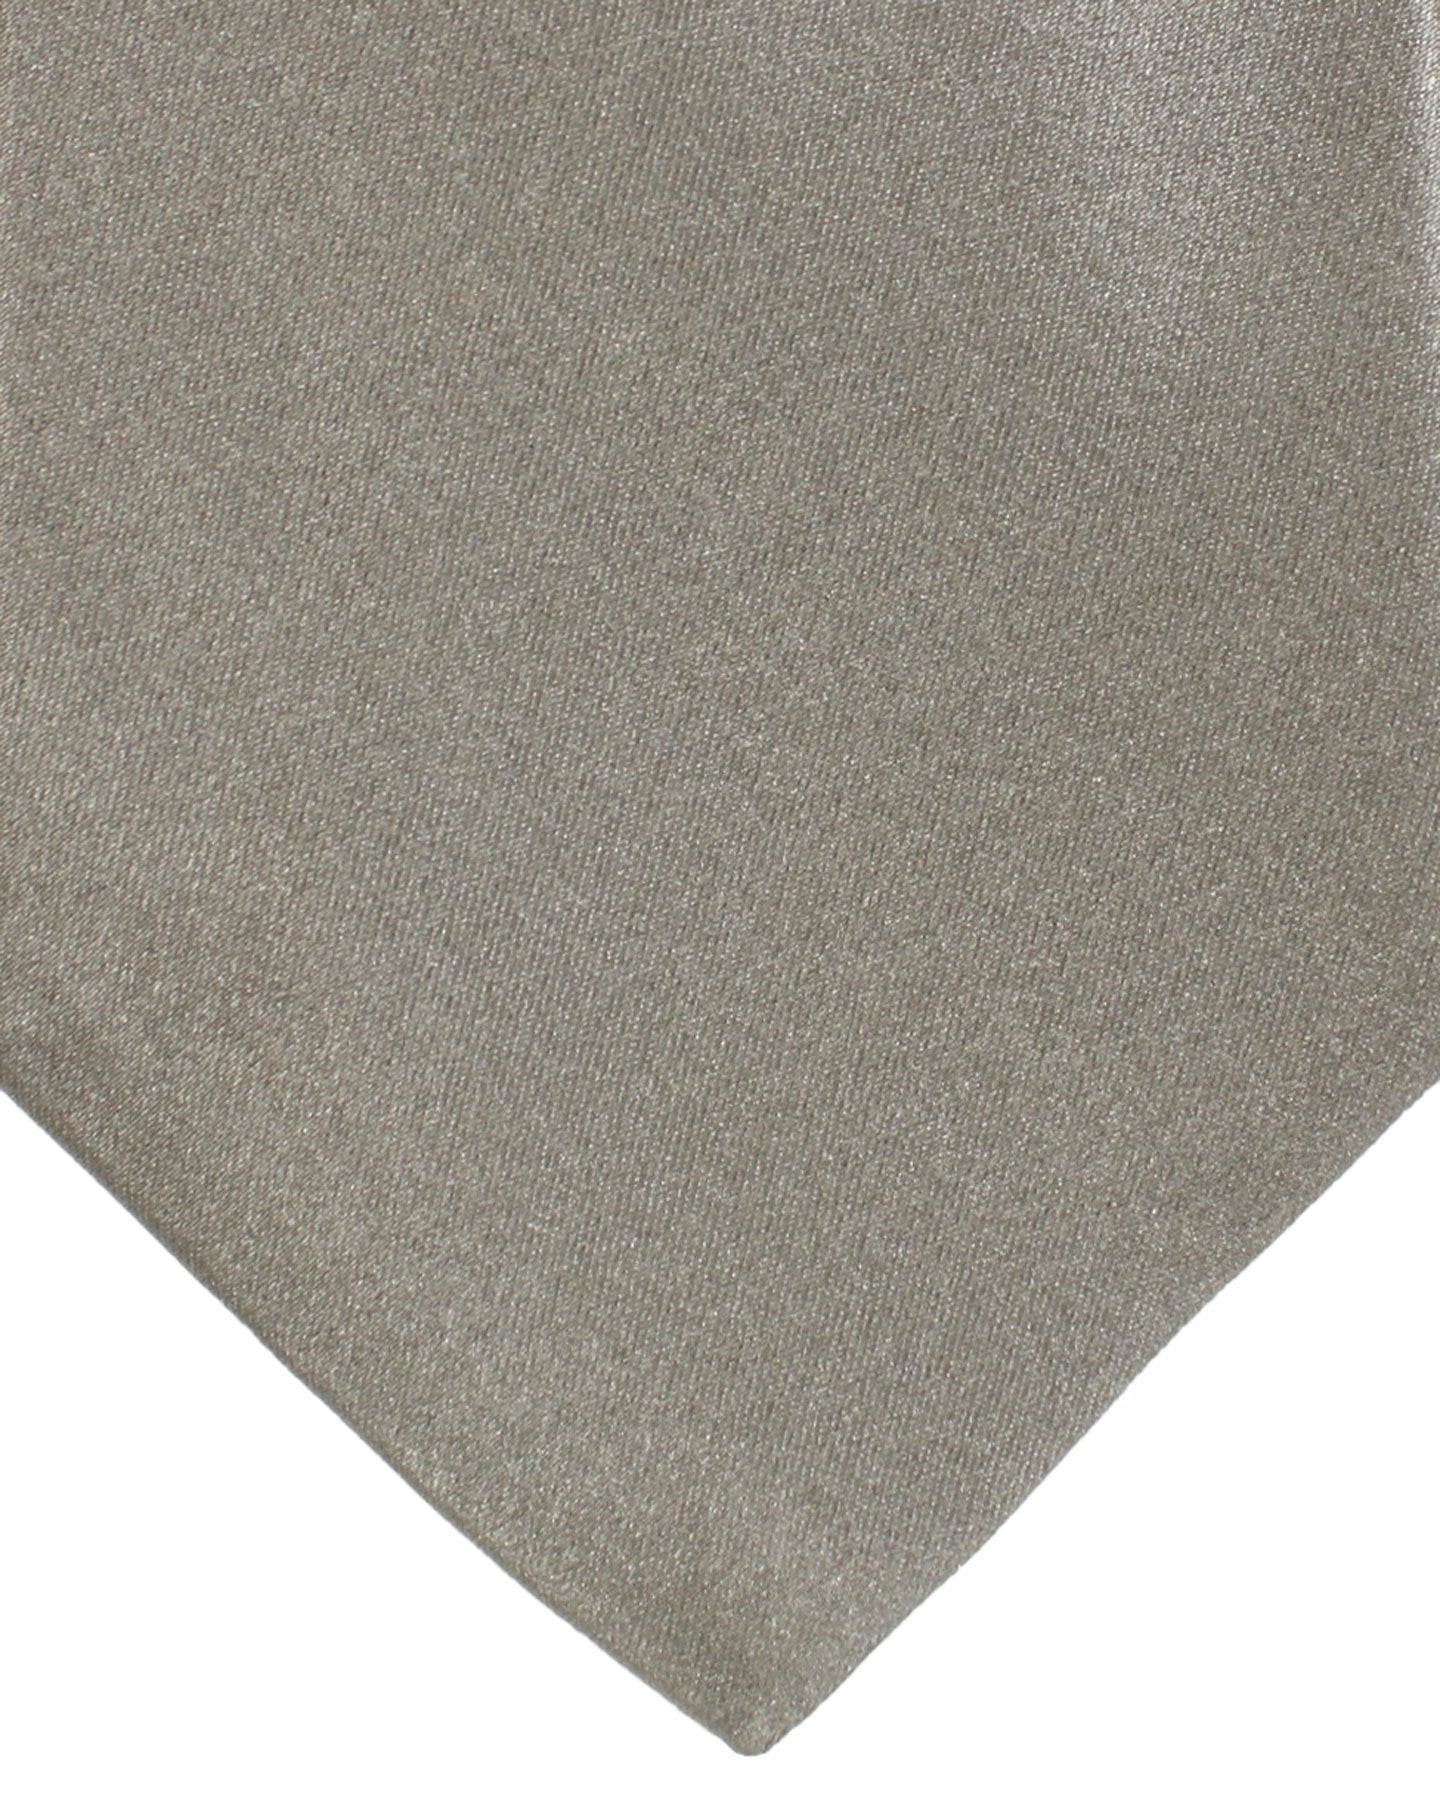 Kiton Silk Tie Gray Solid - Sevenfold Necktie